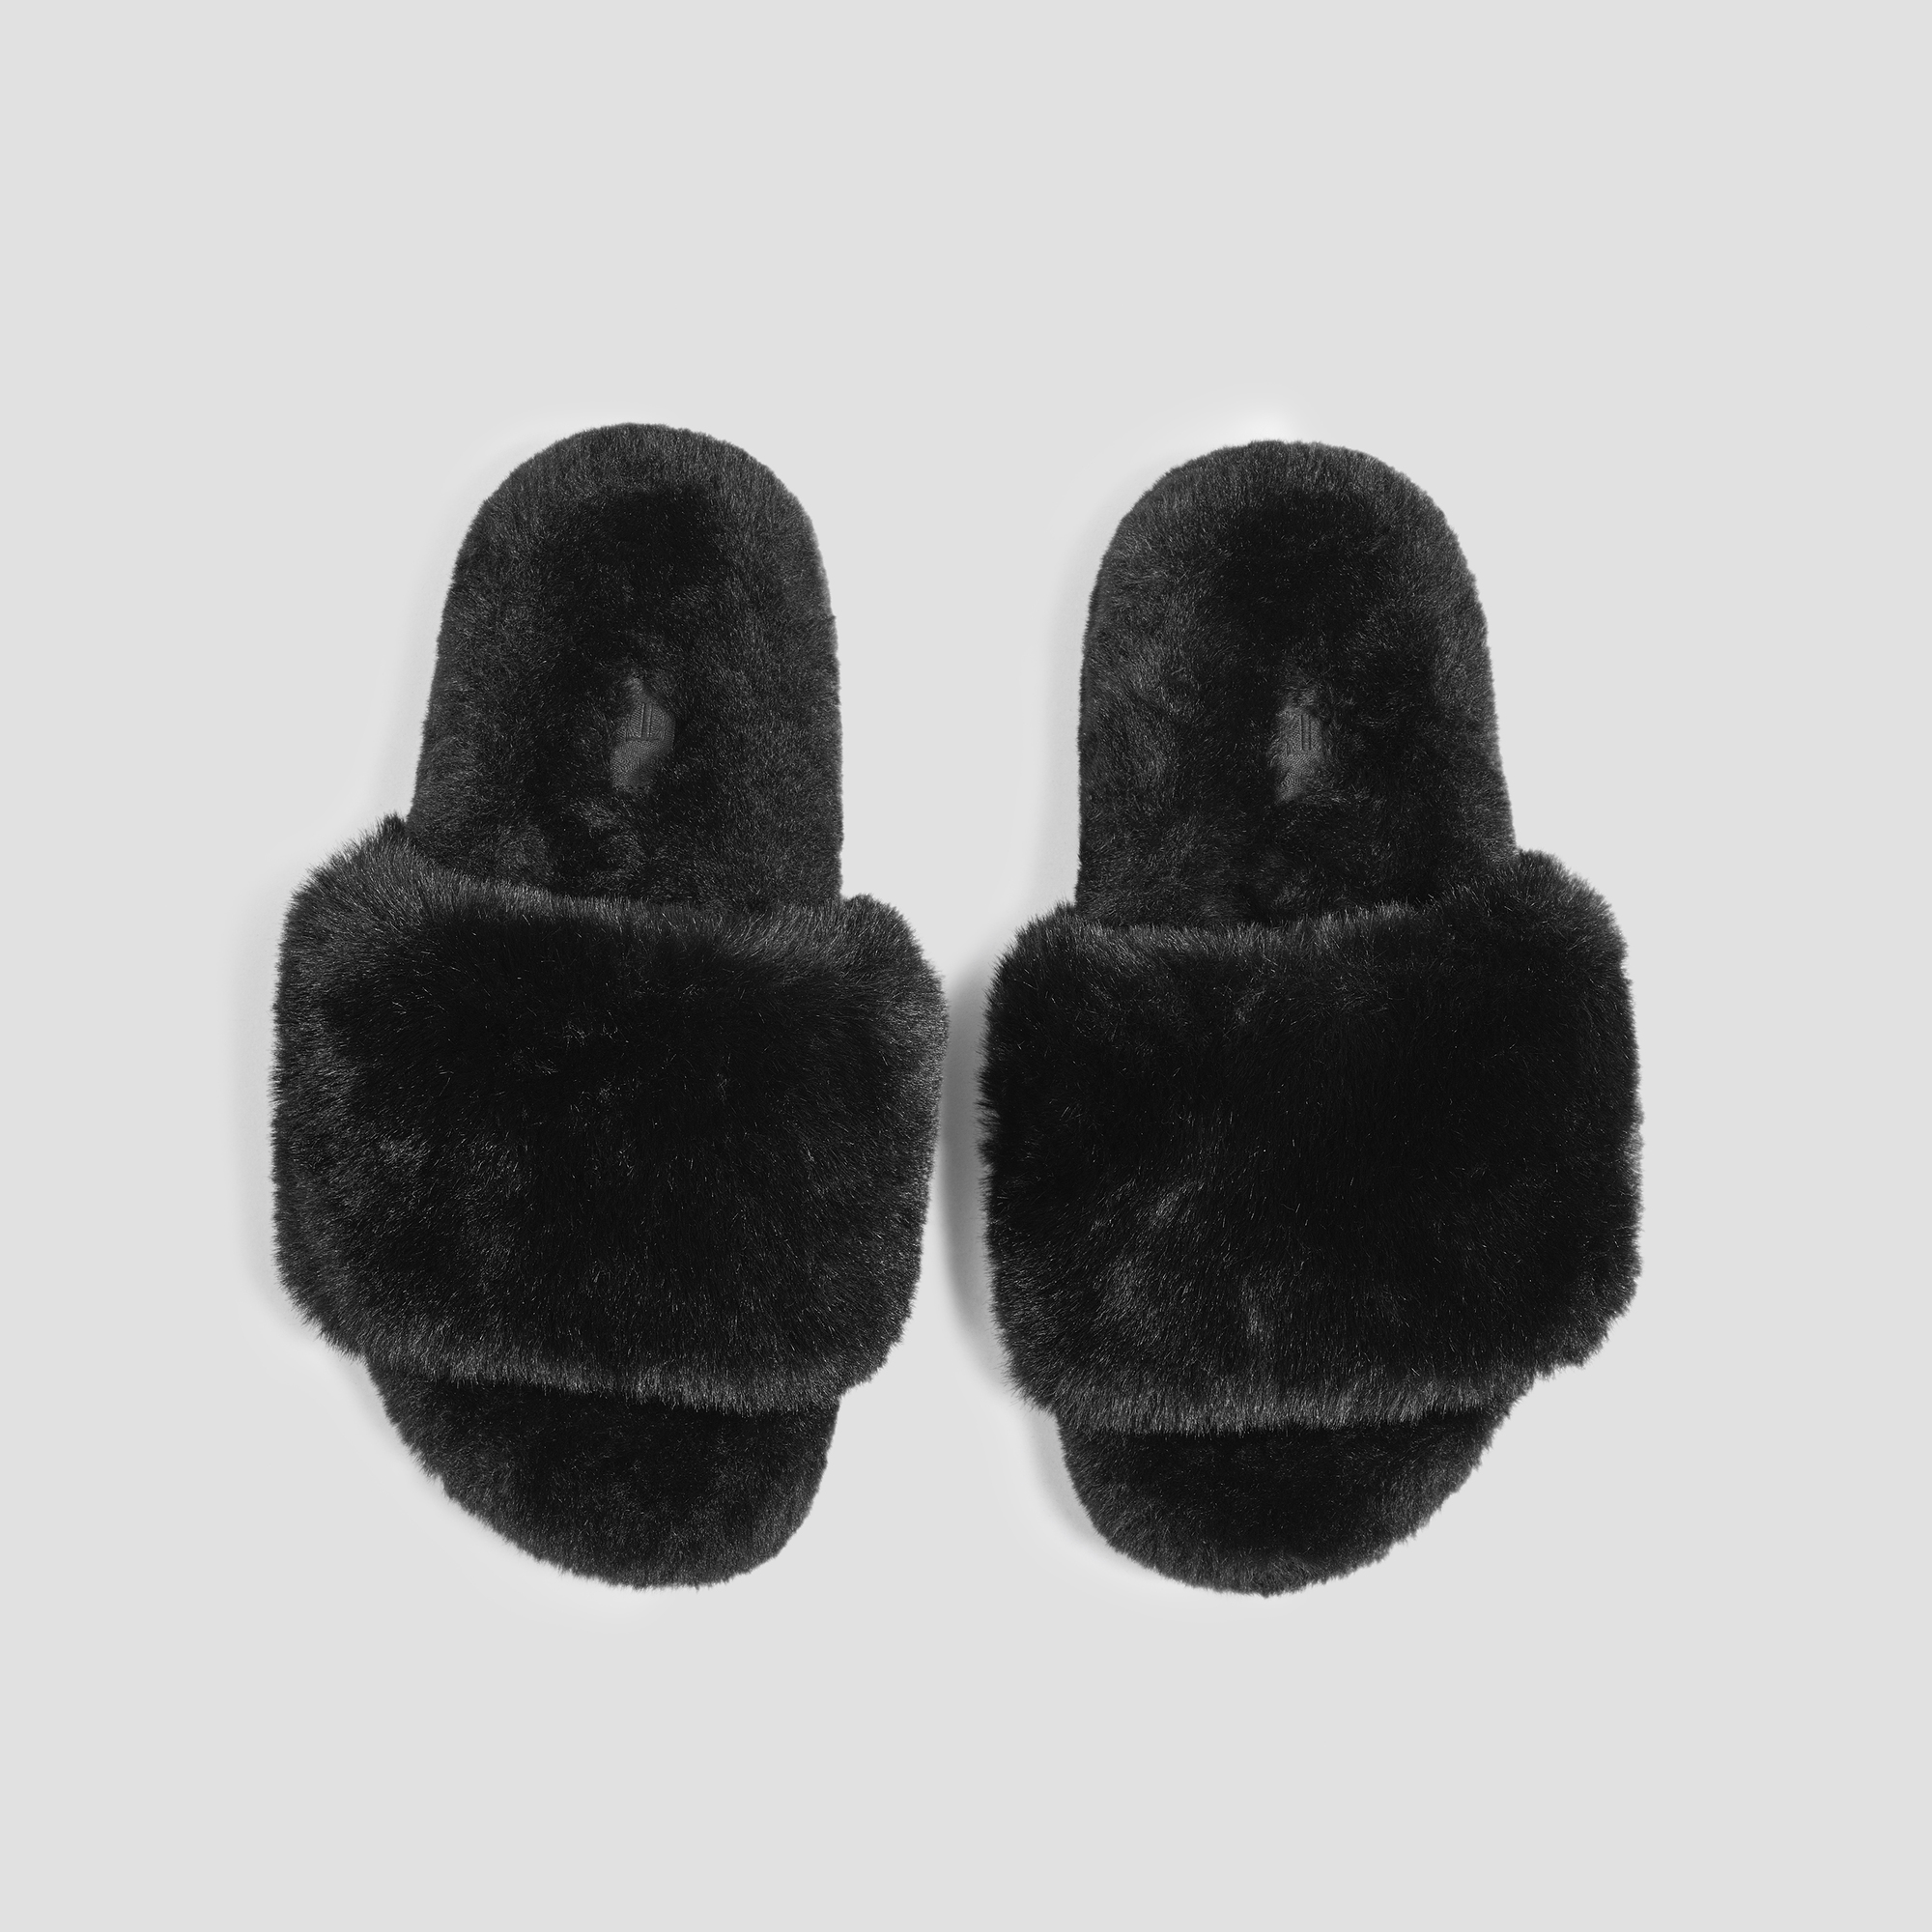 Тапочки Togas Серина черные женские р.38-39 тапочки женские togas оливия бежевые р 38 39